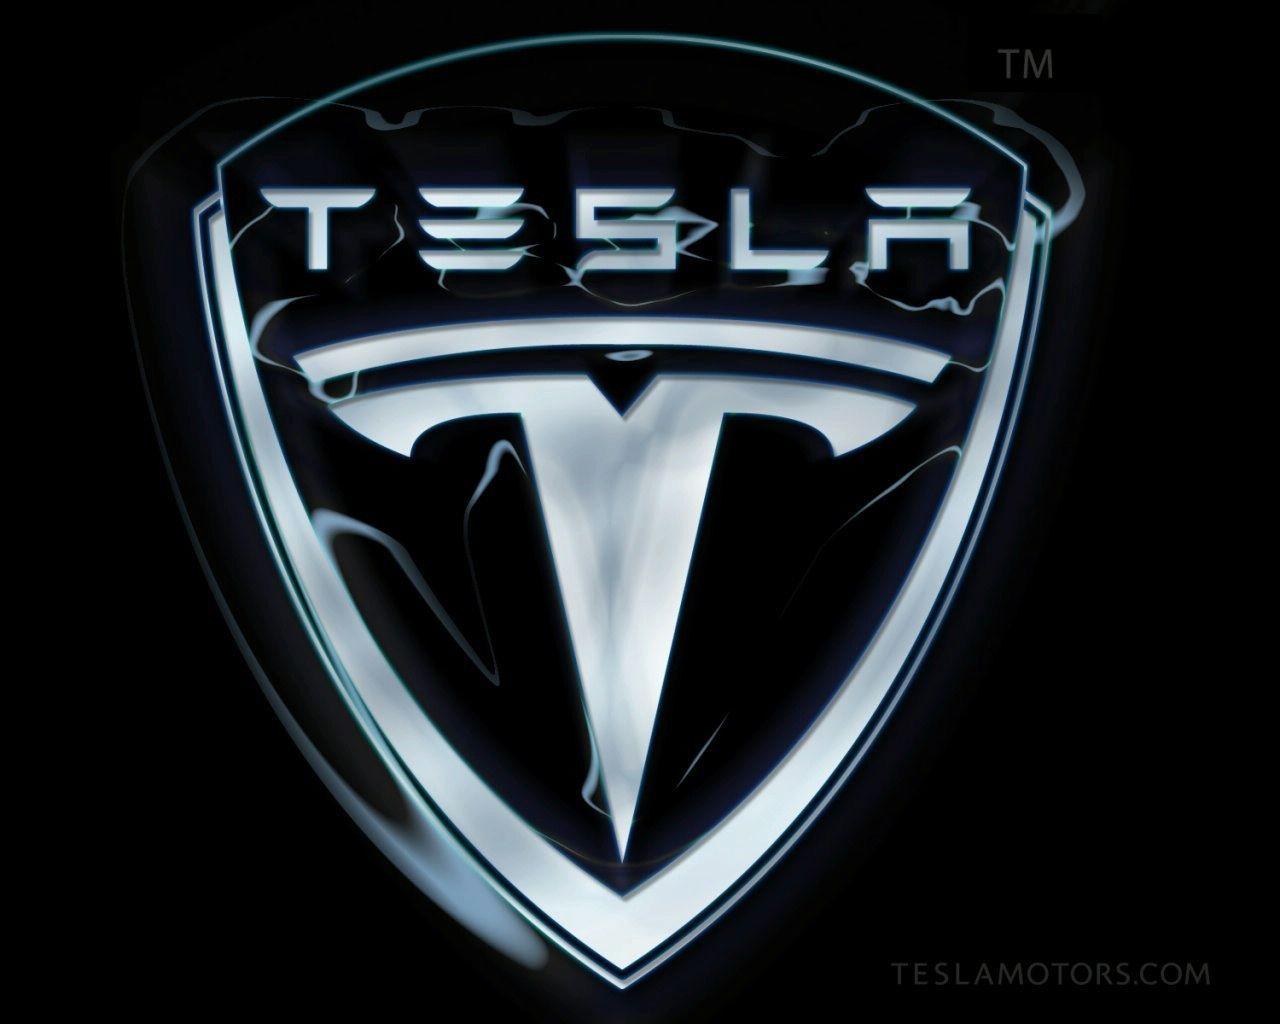 Tesla Auto Logo - Tesla Motors Logo | Automotive | Pinterest | Tesla motors, Cars and ...